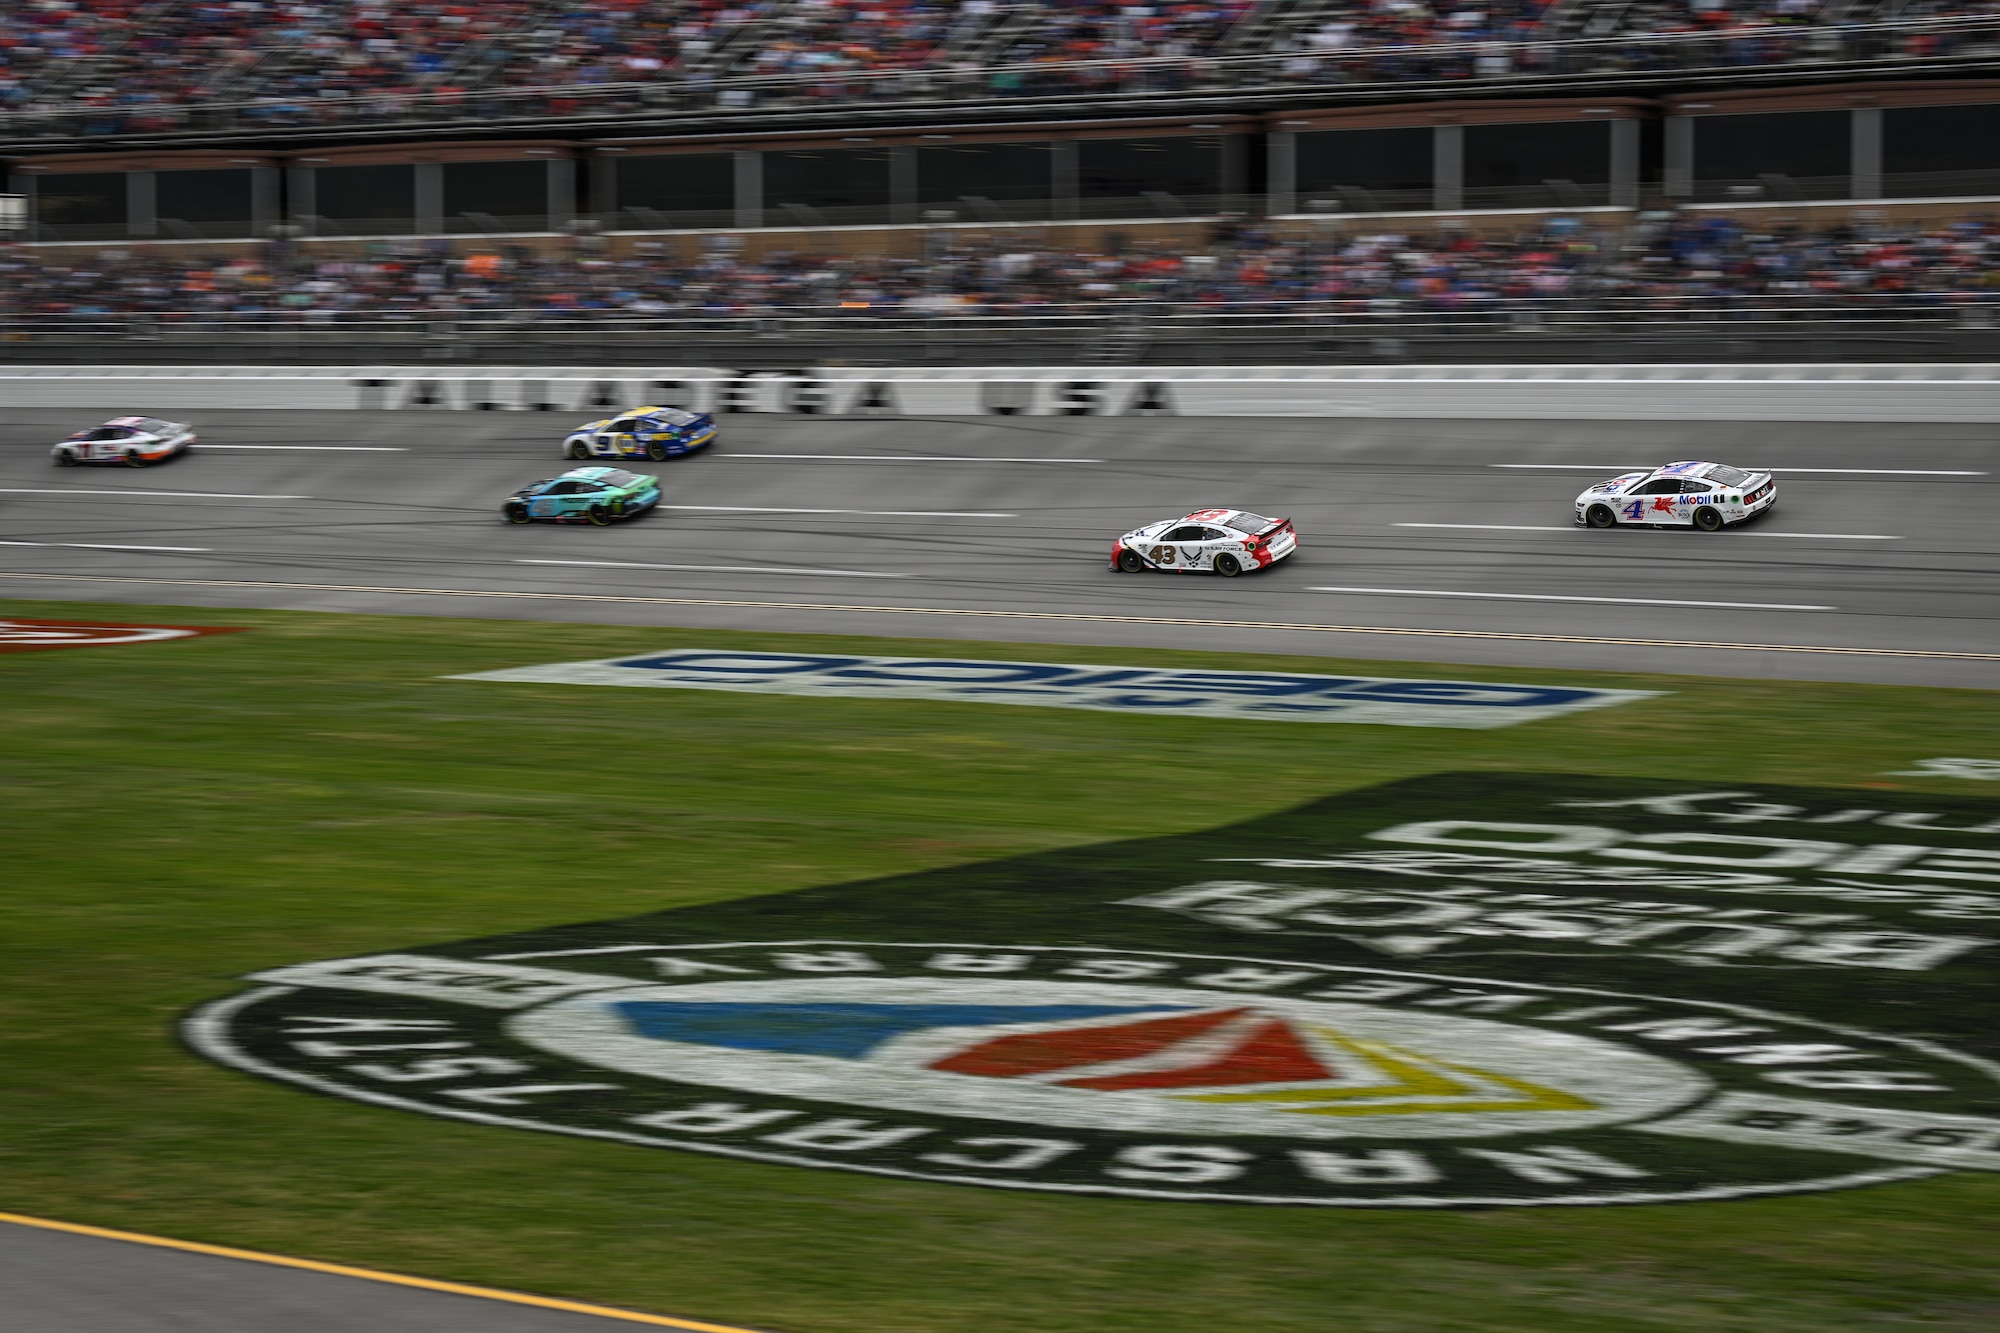 Photo of 5 cars racing.